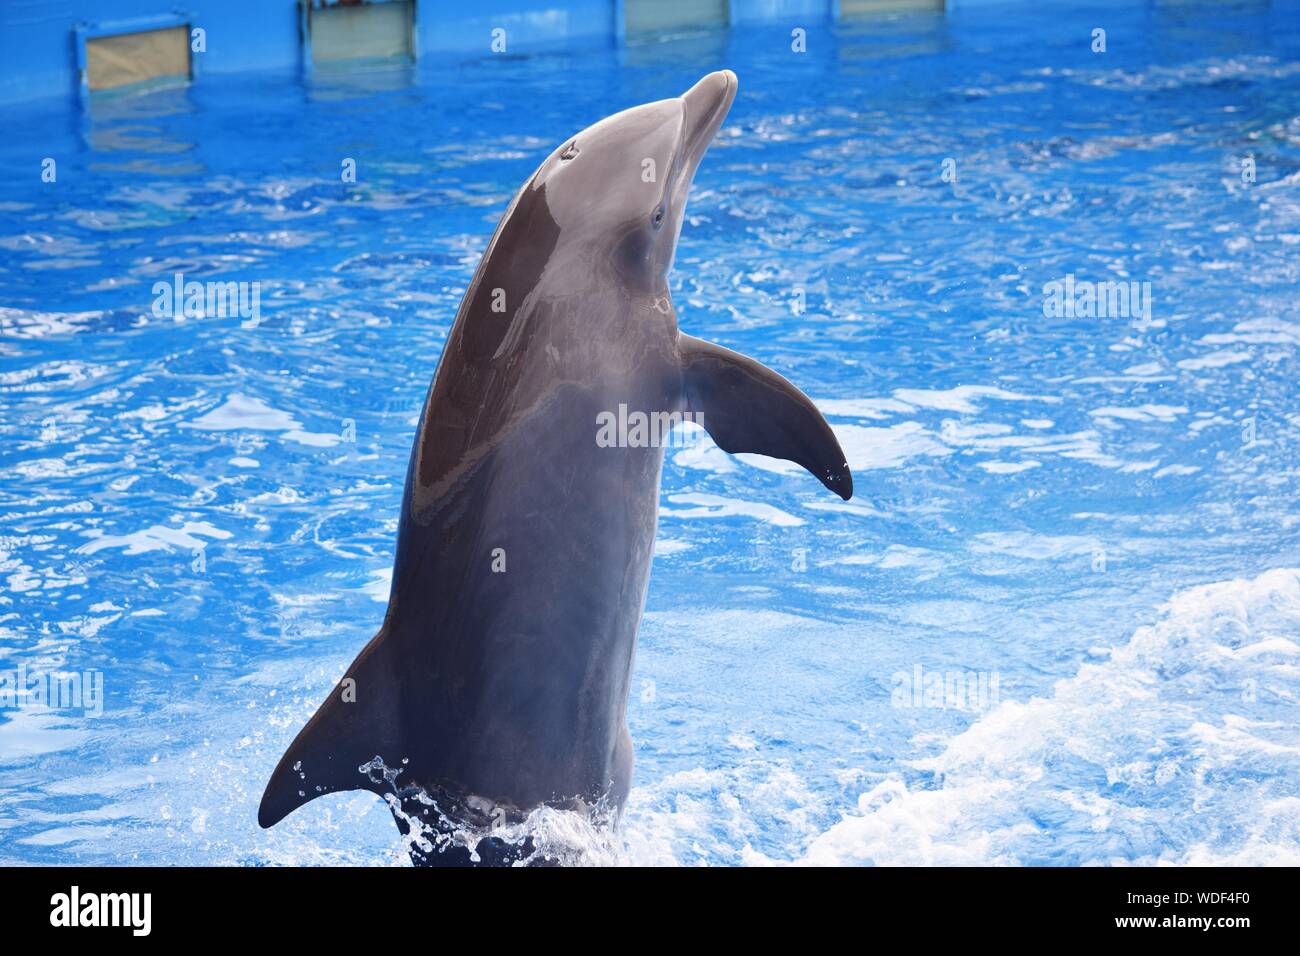 Dolphin Jumping In Pool At Aquarium Stock Photo